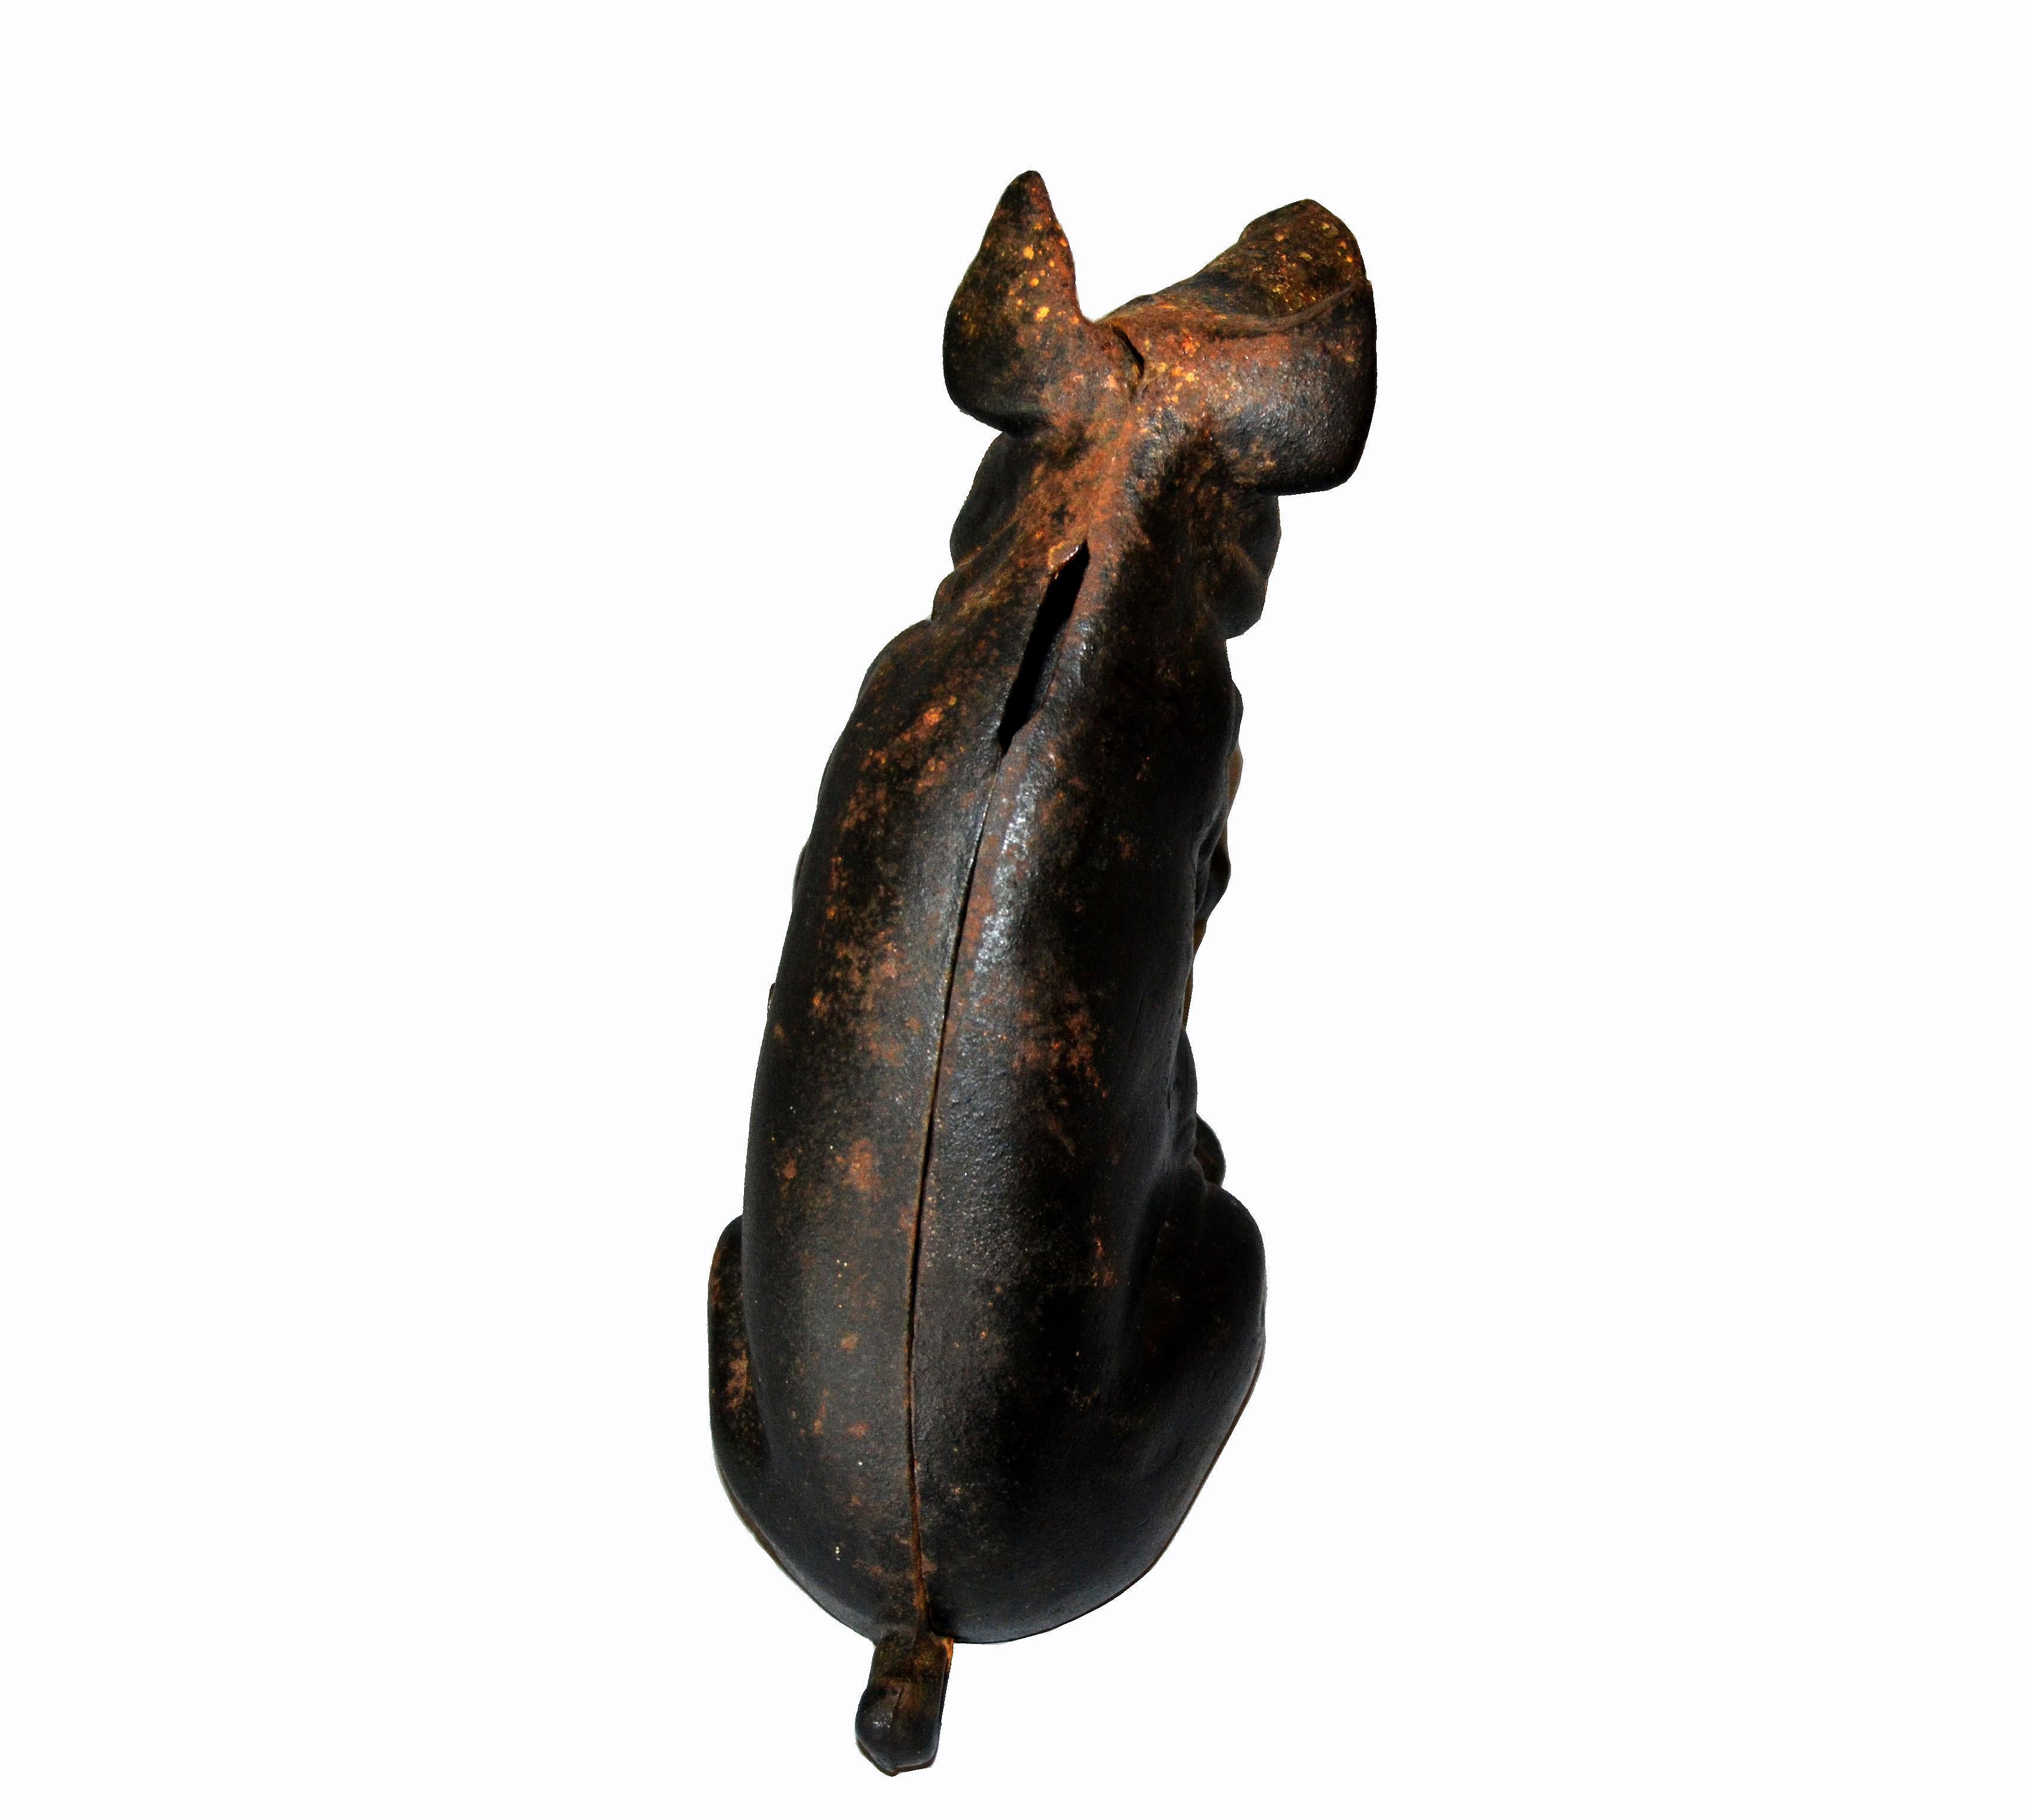 Rustic 19th Century American Black Cast Iron Piggy Bank Money Box Animal Sculpture For Sale